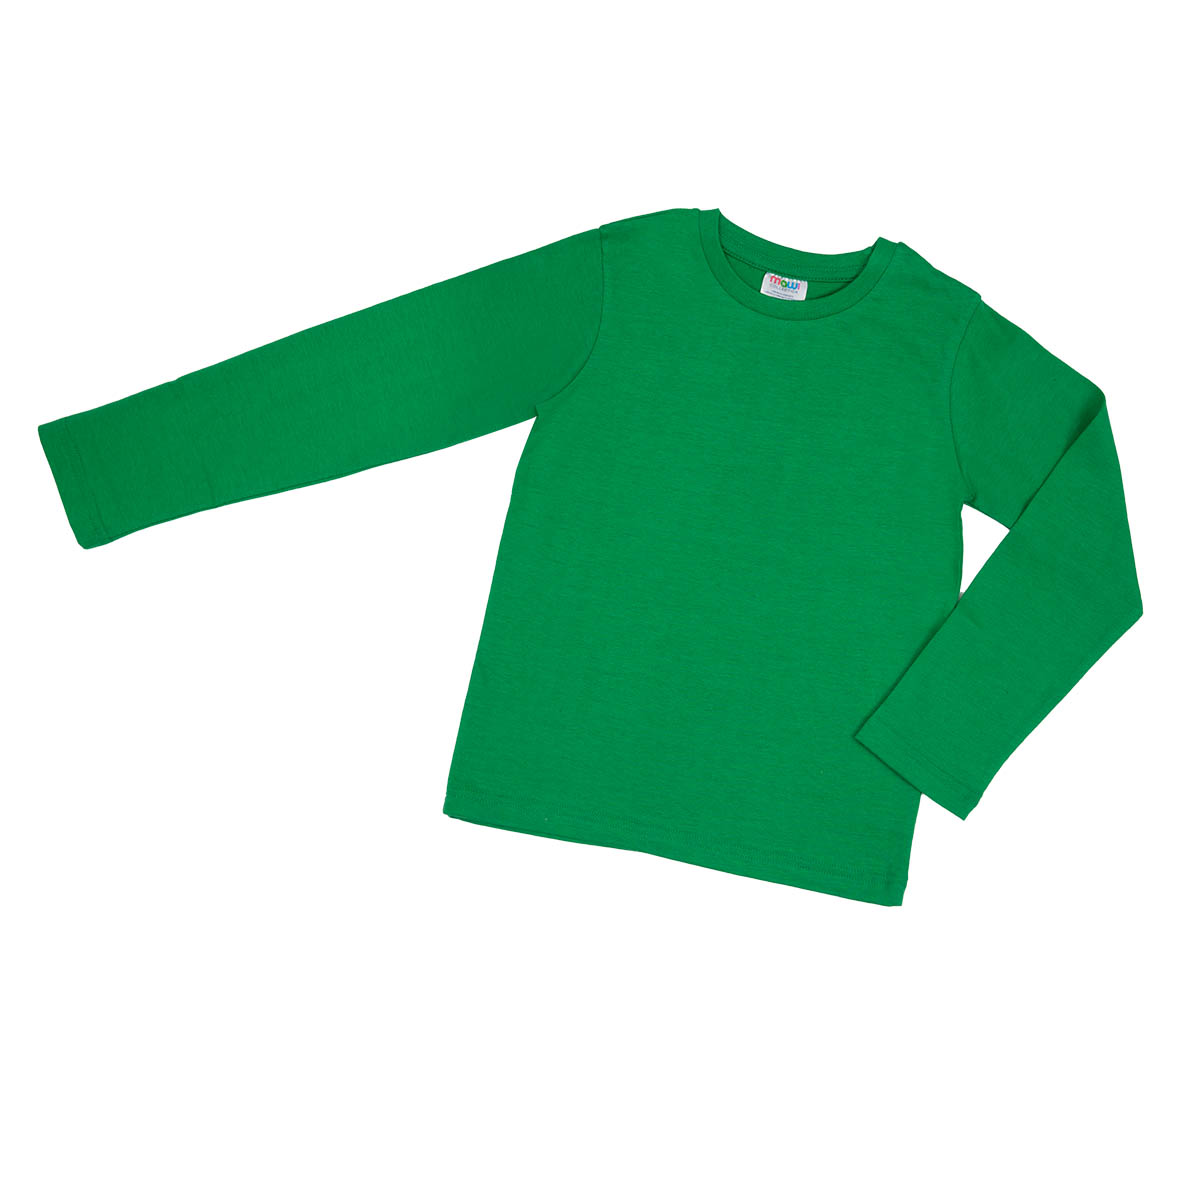 Mawi maglia jersey basica extra size - Mawi